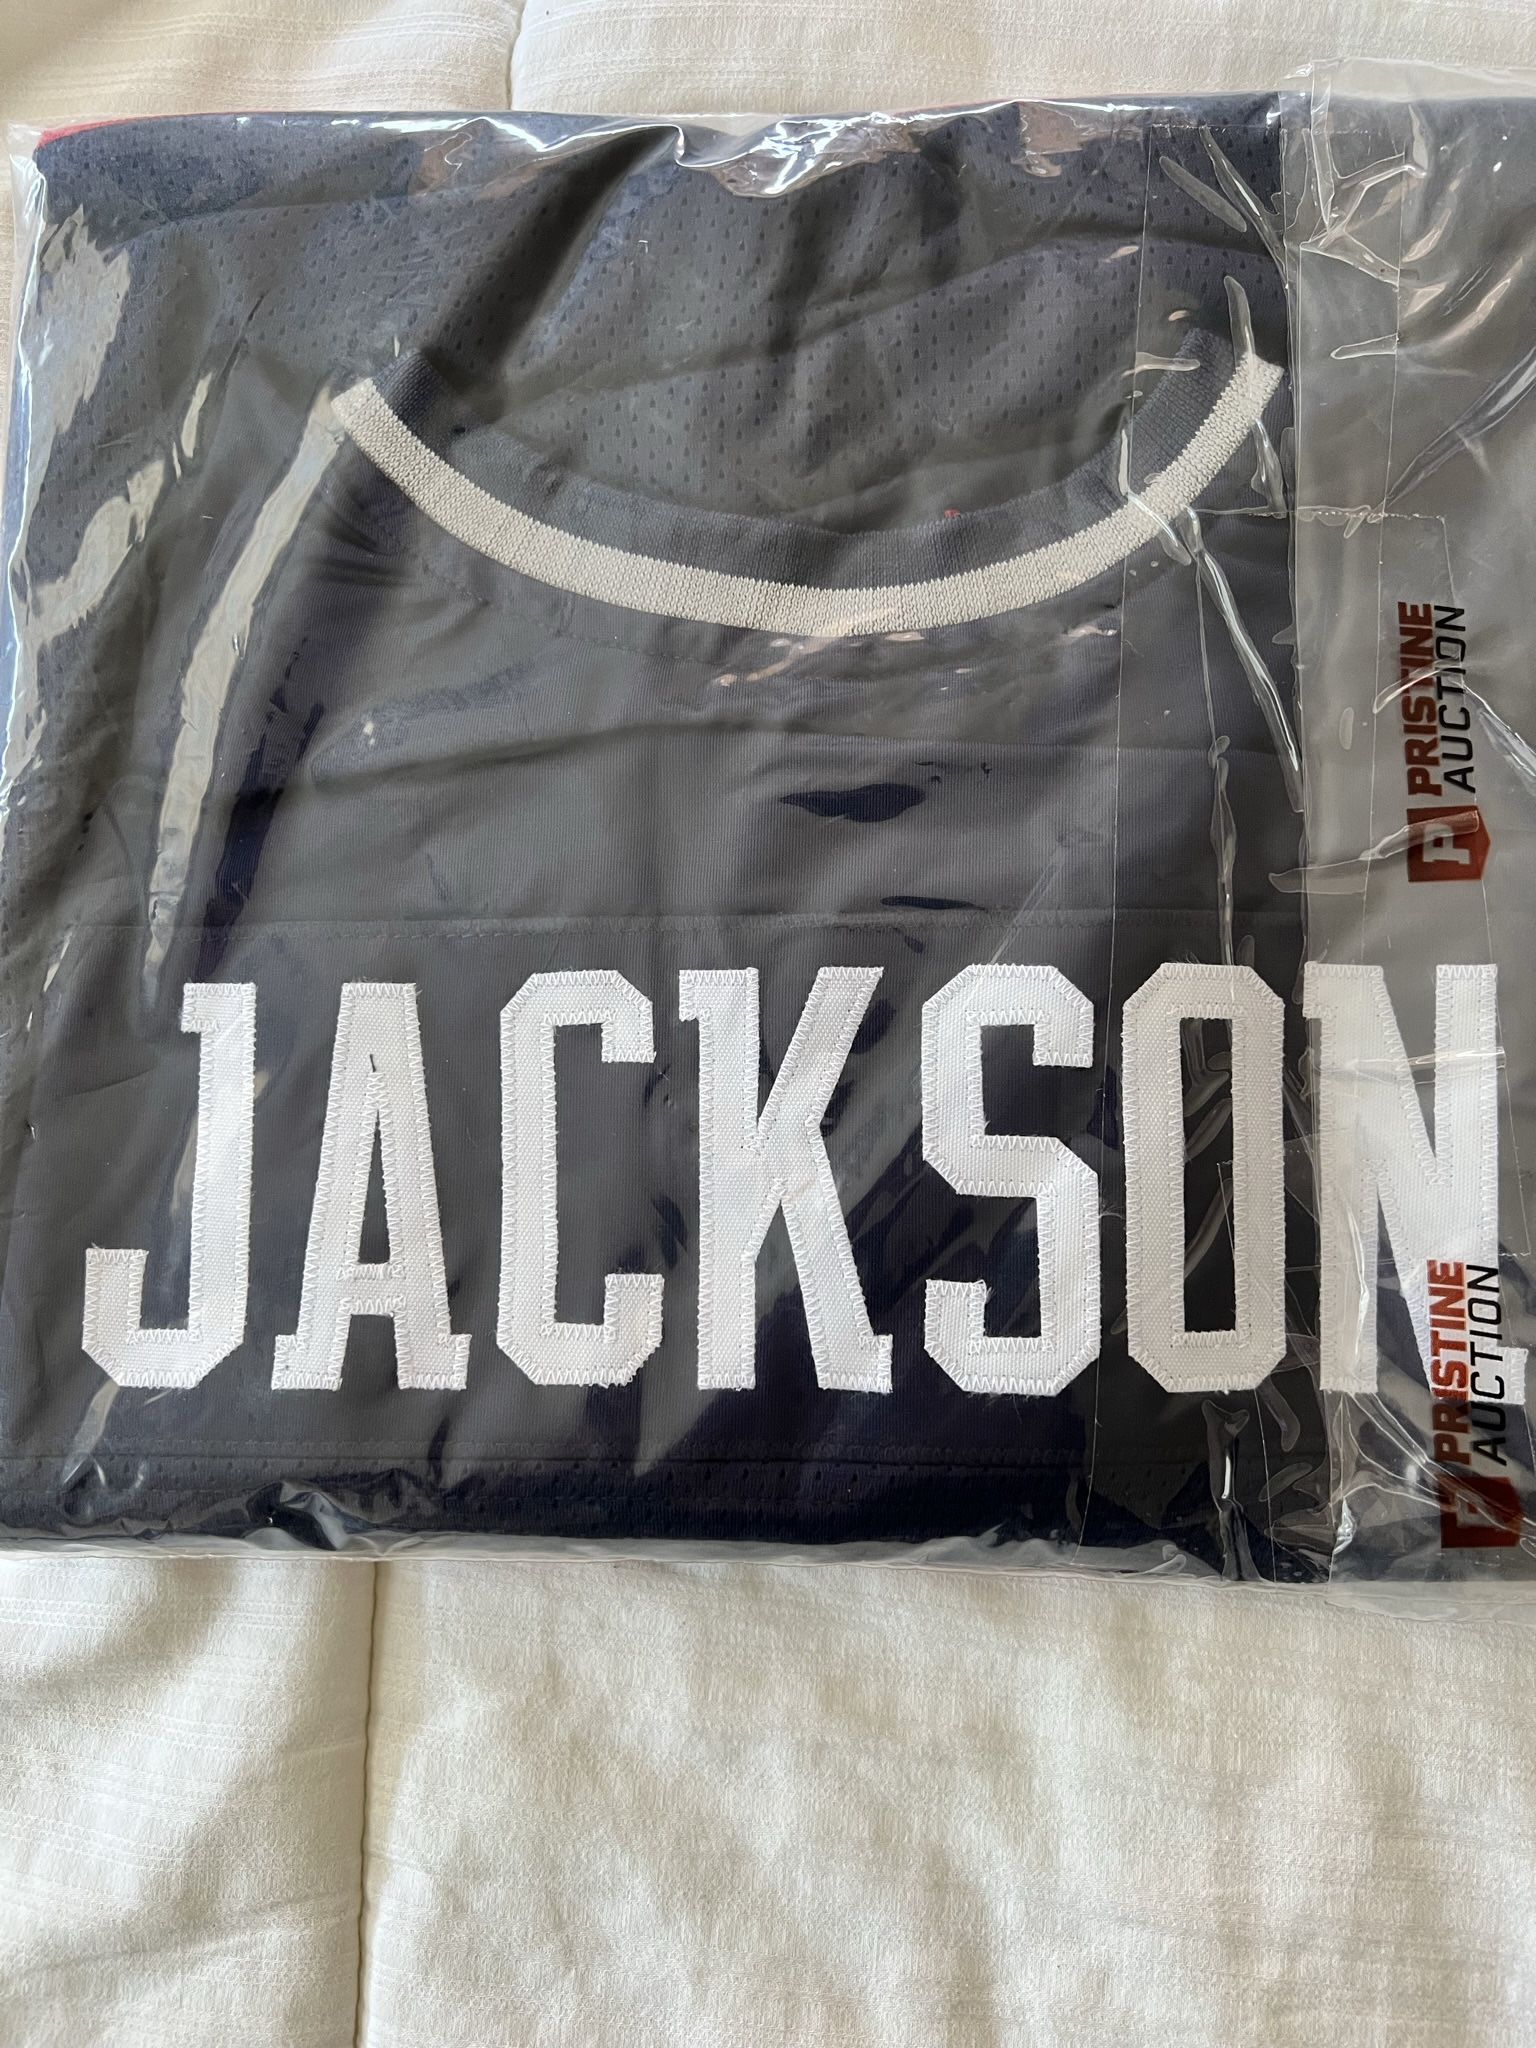 Rookie JC Jackson Signed Jersey!!!